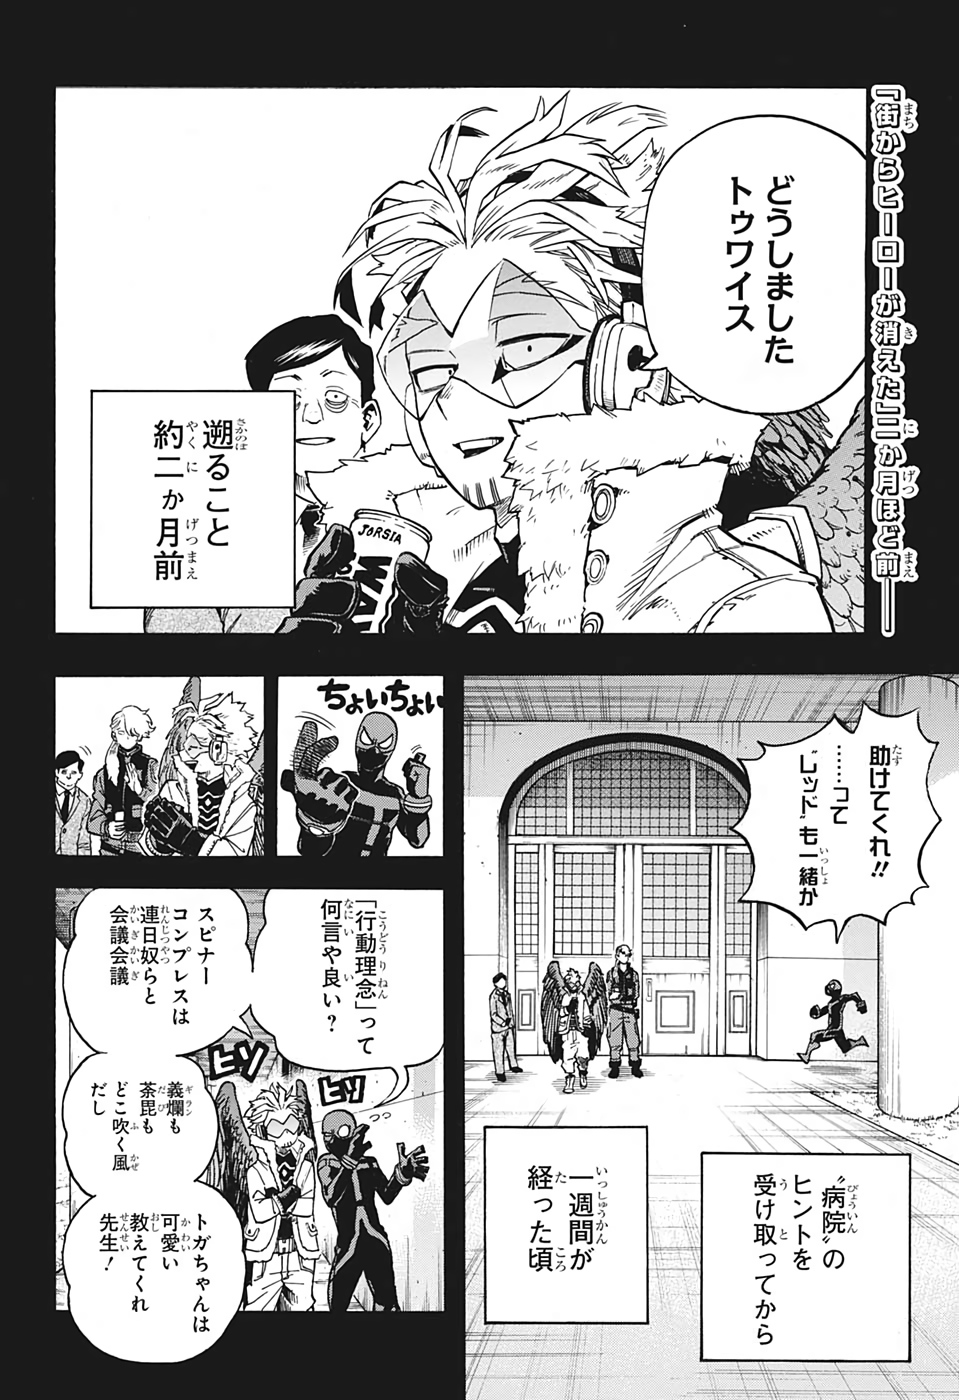 Boku no Hero Academia - Chapter 258 - Page 2